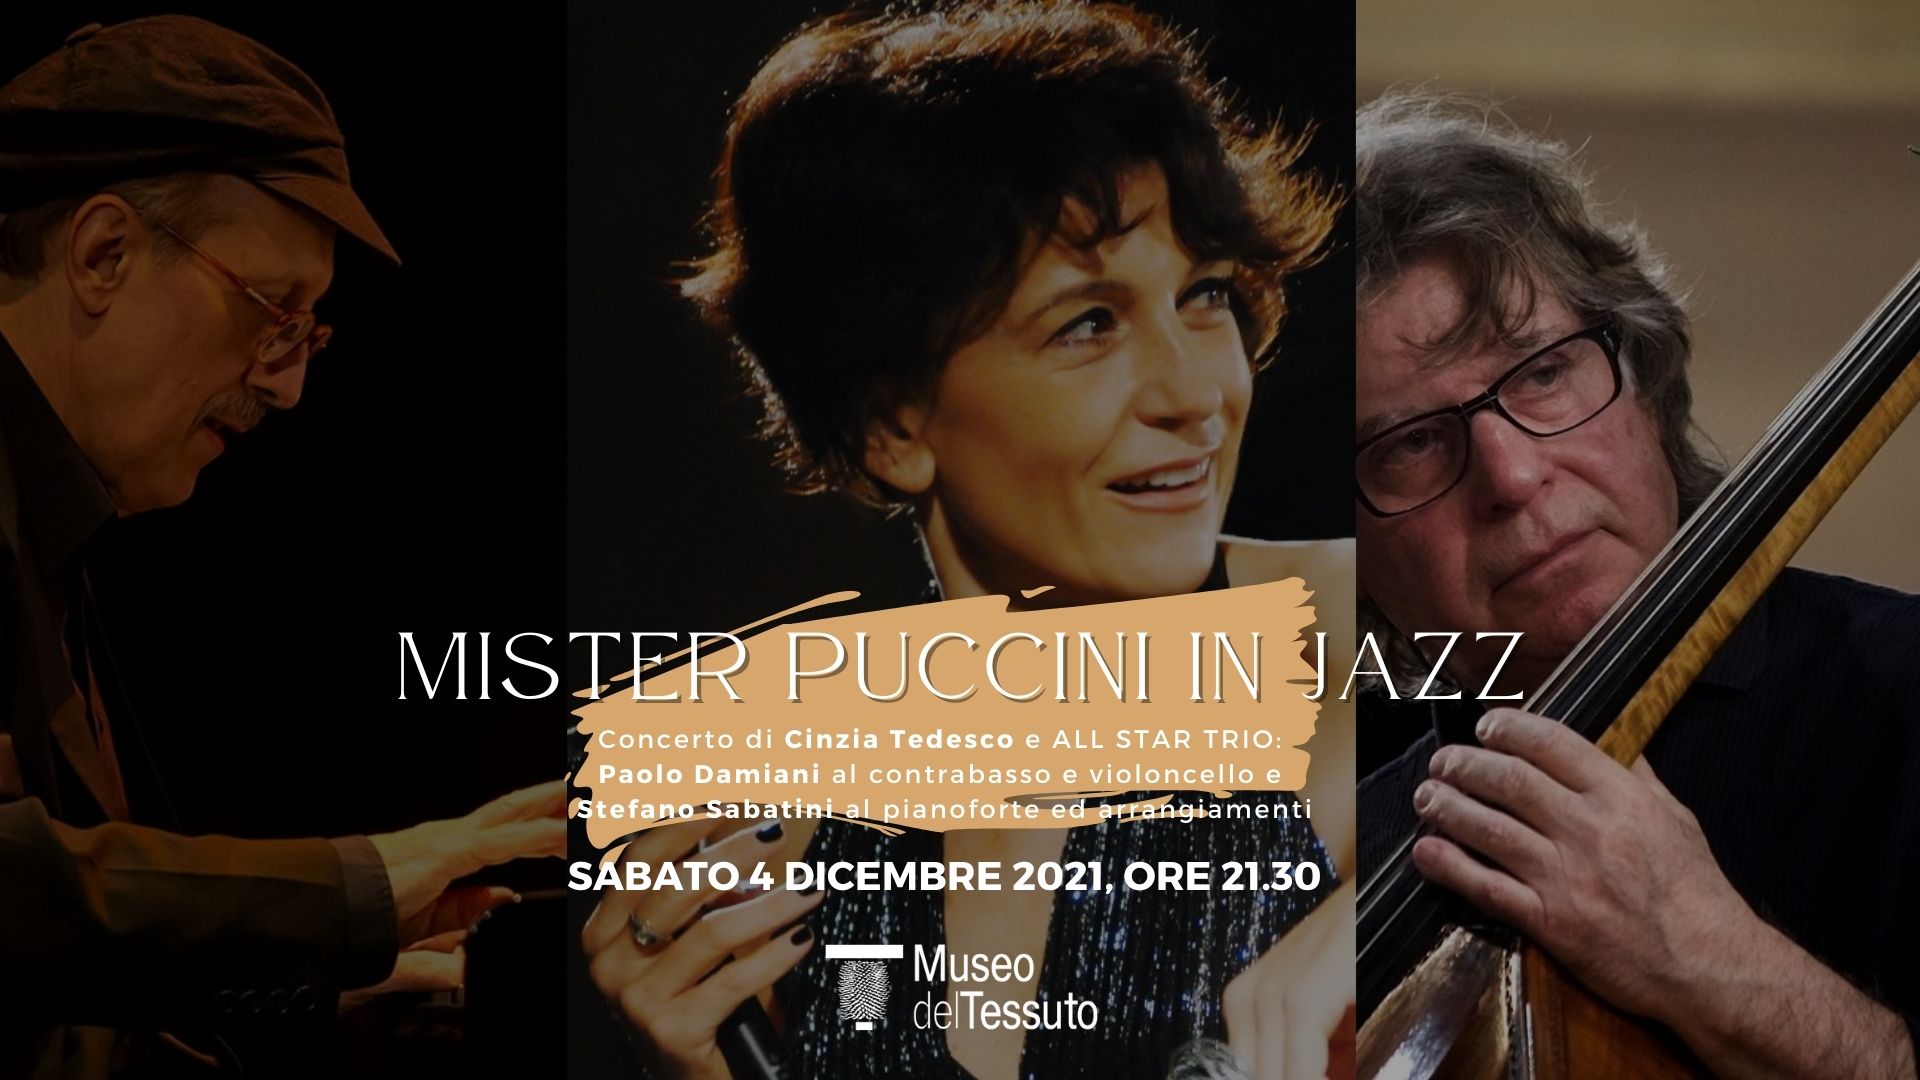 Locandina evento "Mister Puccini in jazz"